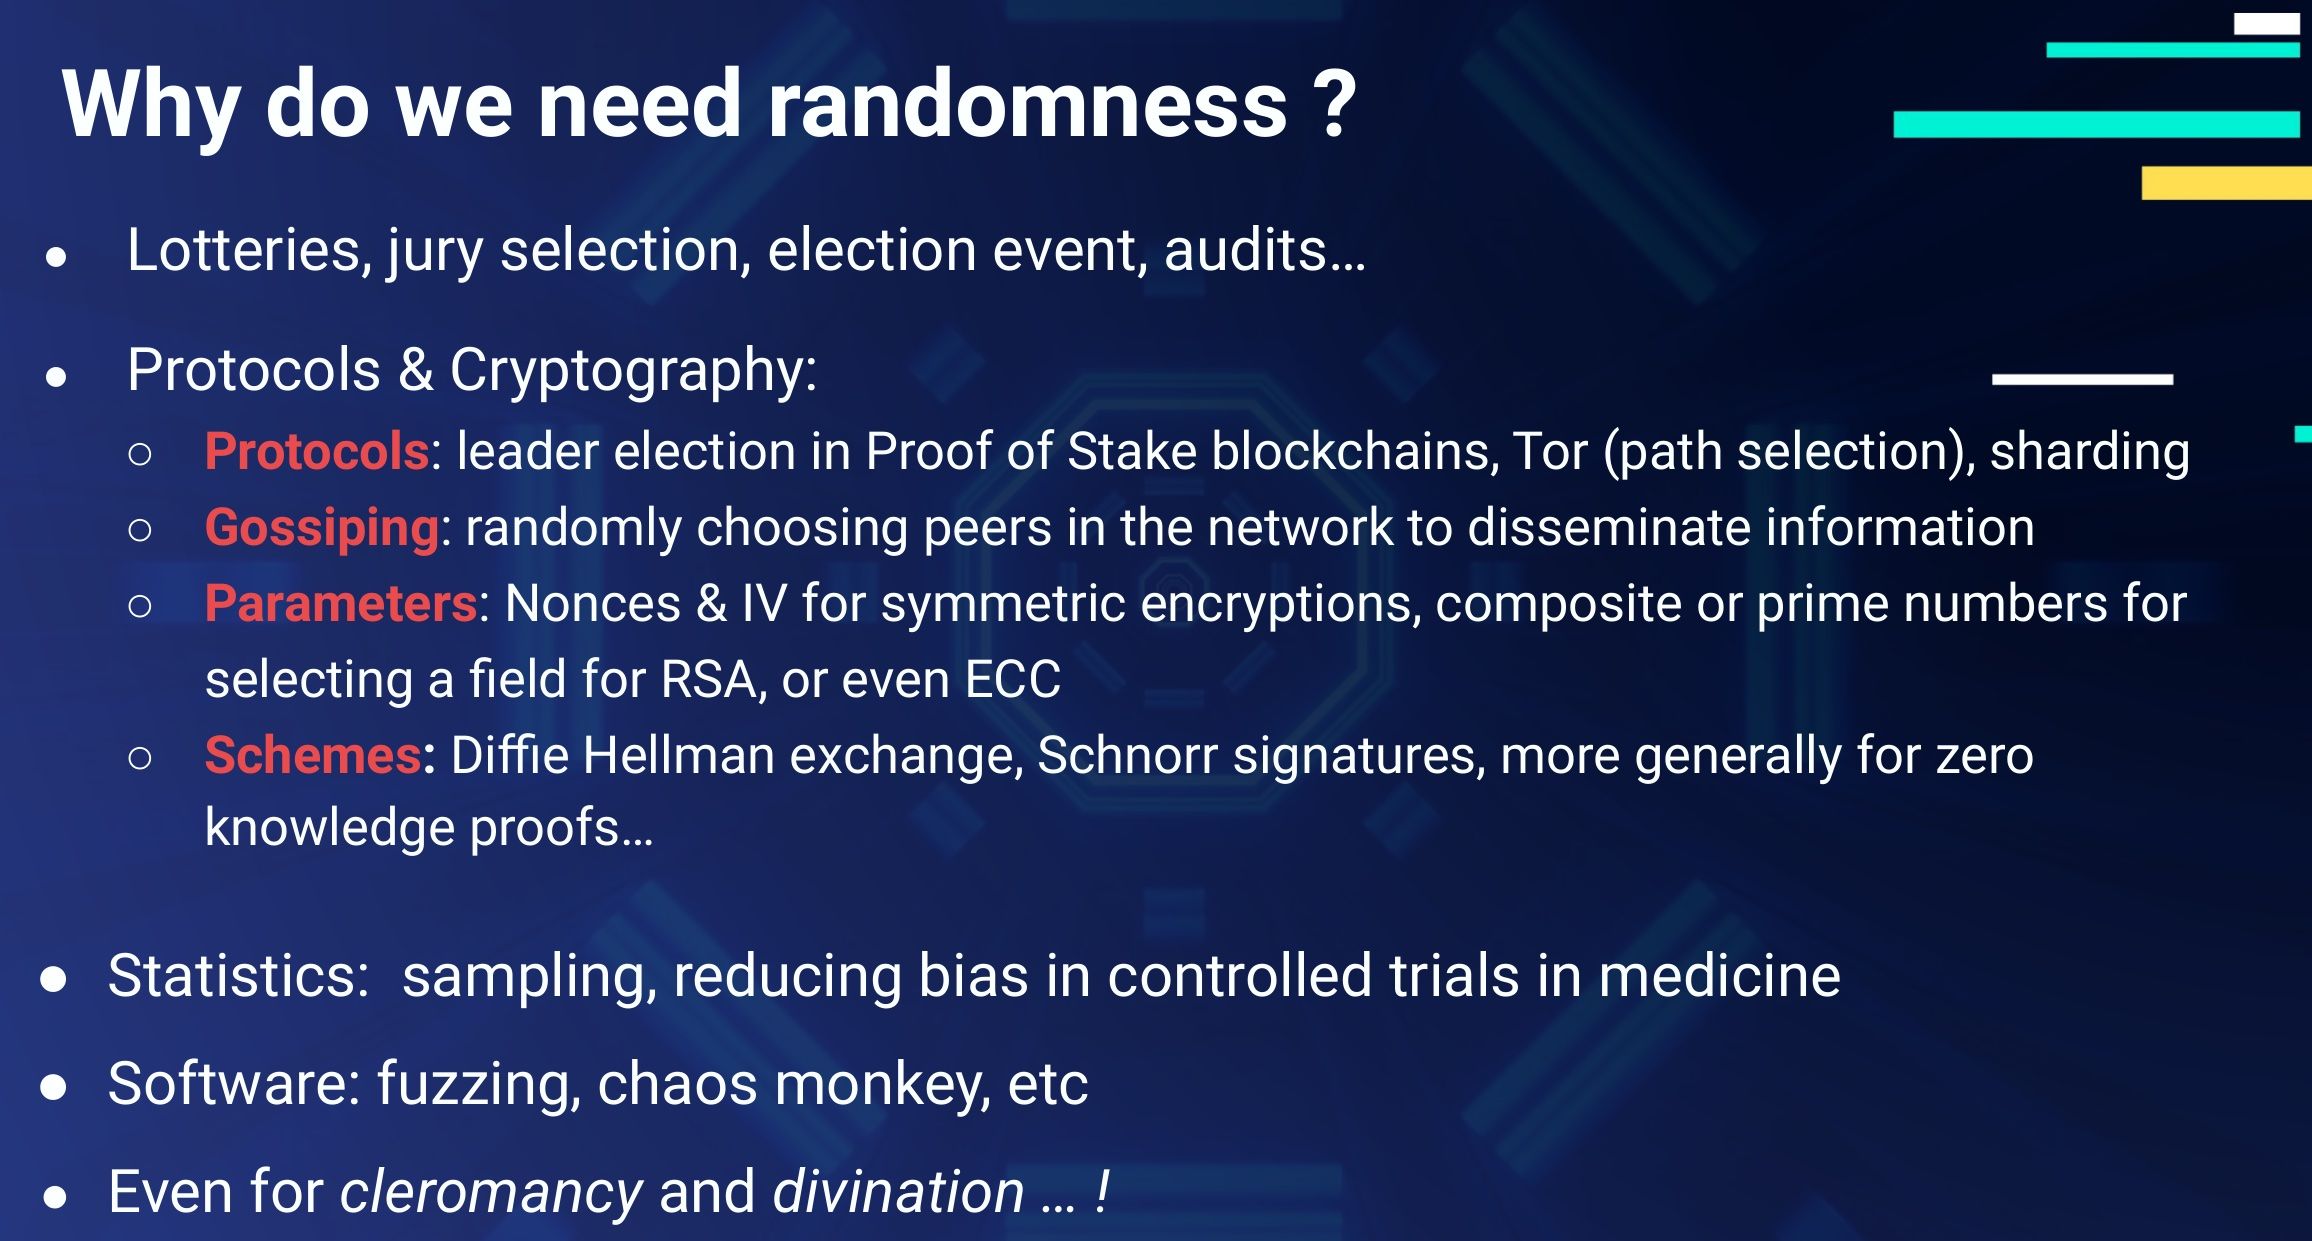 Why do we need randomness?